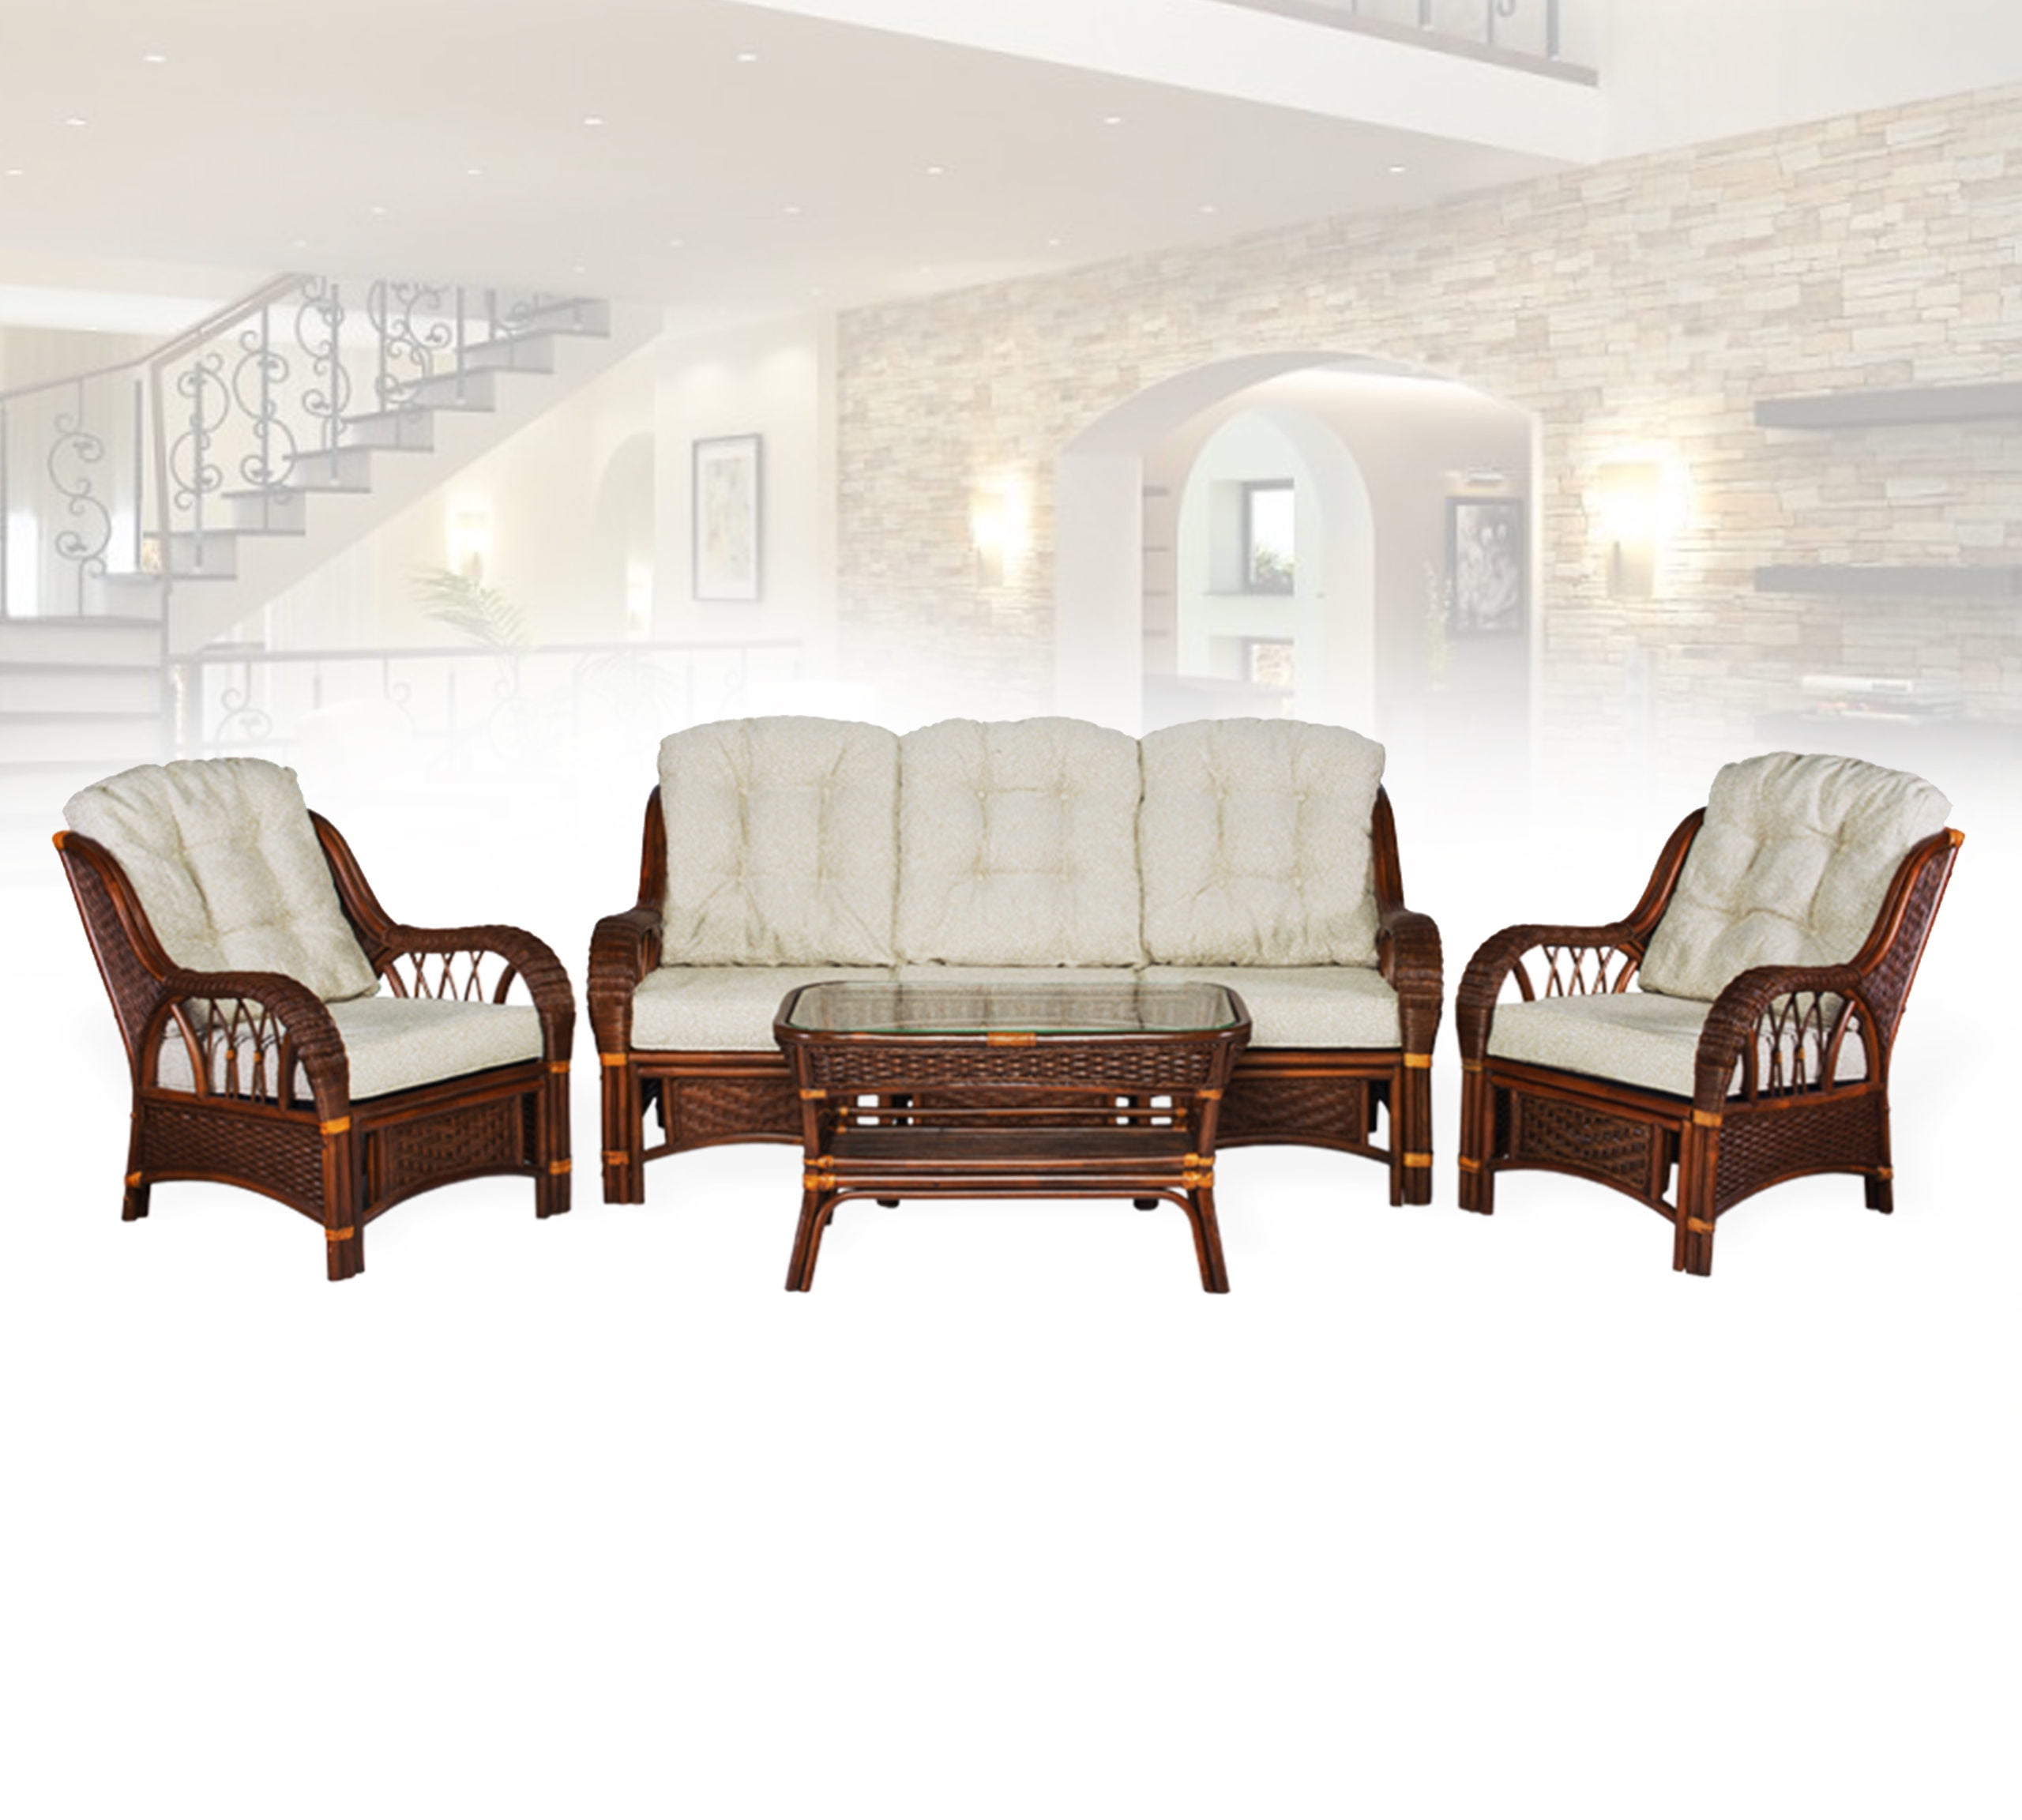 SK New Interiors Alexa Rattan Wicker Living Room Set 4 Pieces 2 Lounge Chair ThreeSeater Sofa Coffee Table Dark Walnut Color Handmade Design With Cushion Walmartcom Walmartcom